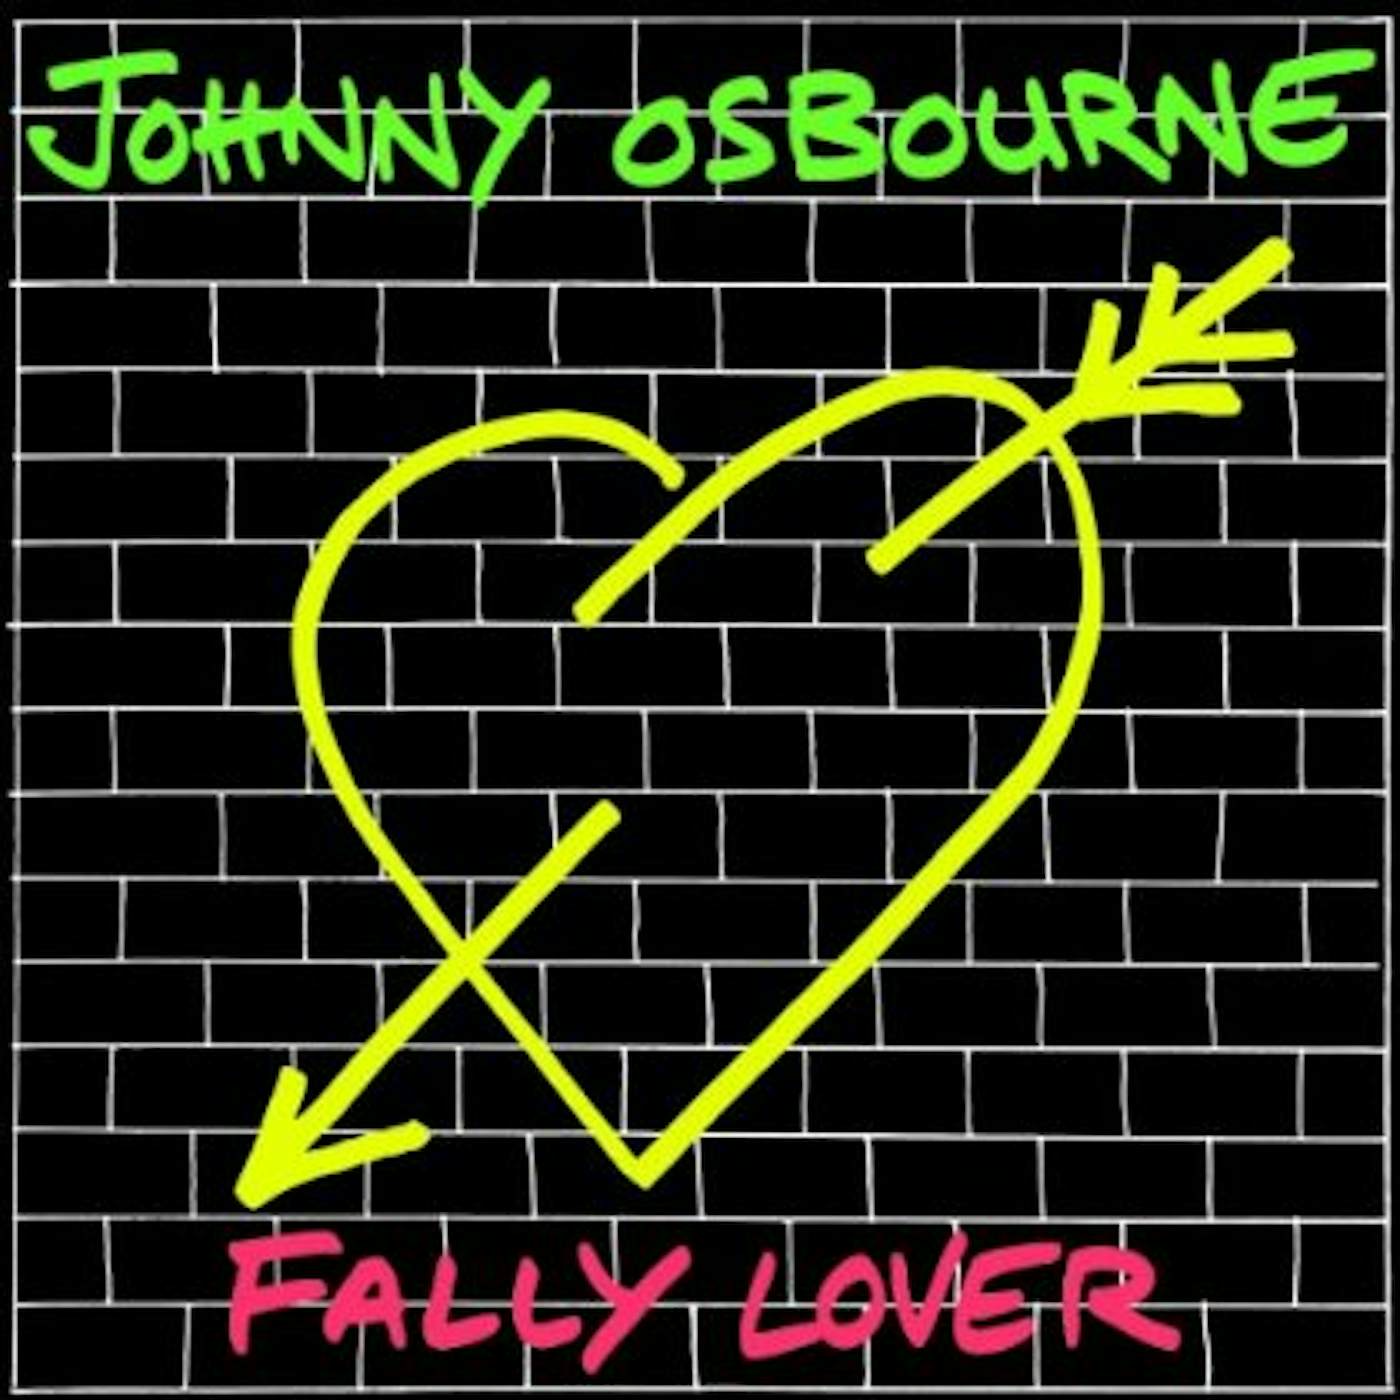 Johnny Osbourne FALLY LOVER Vinyl Record - UK Release